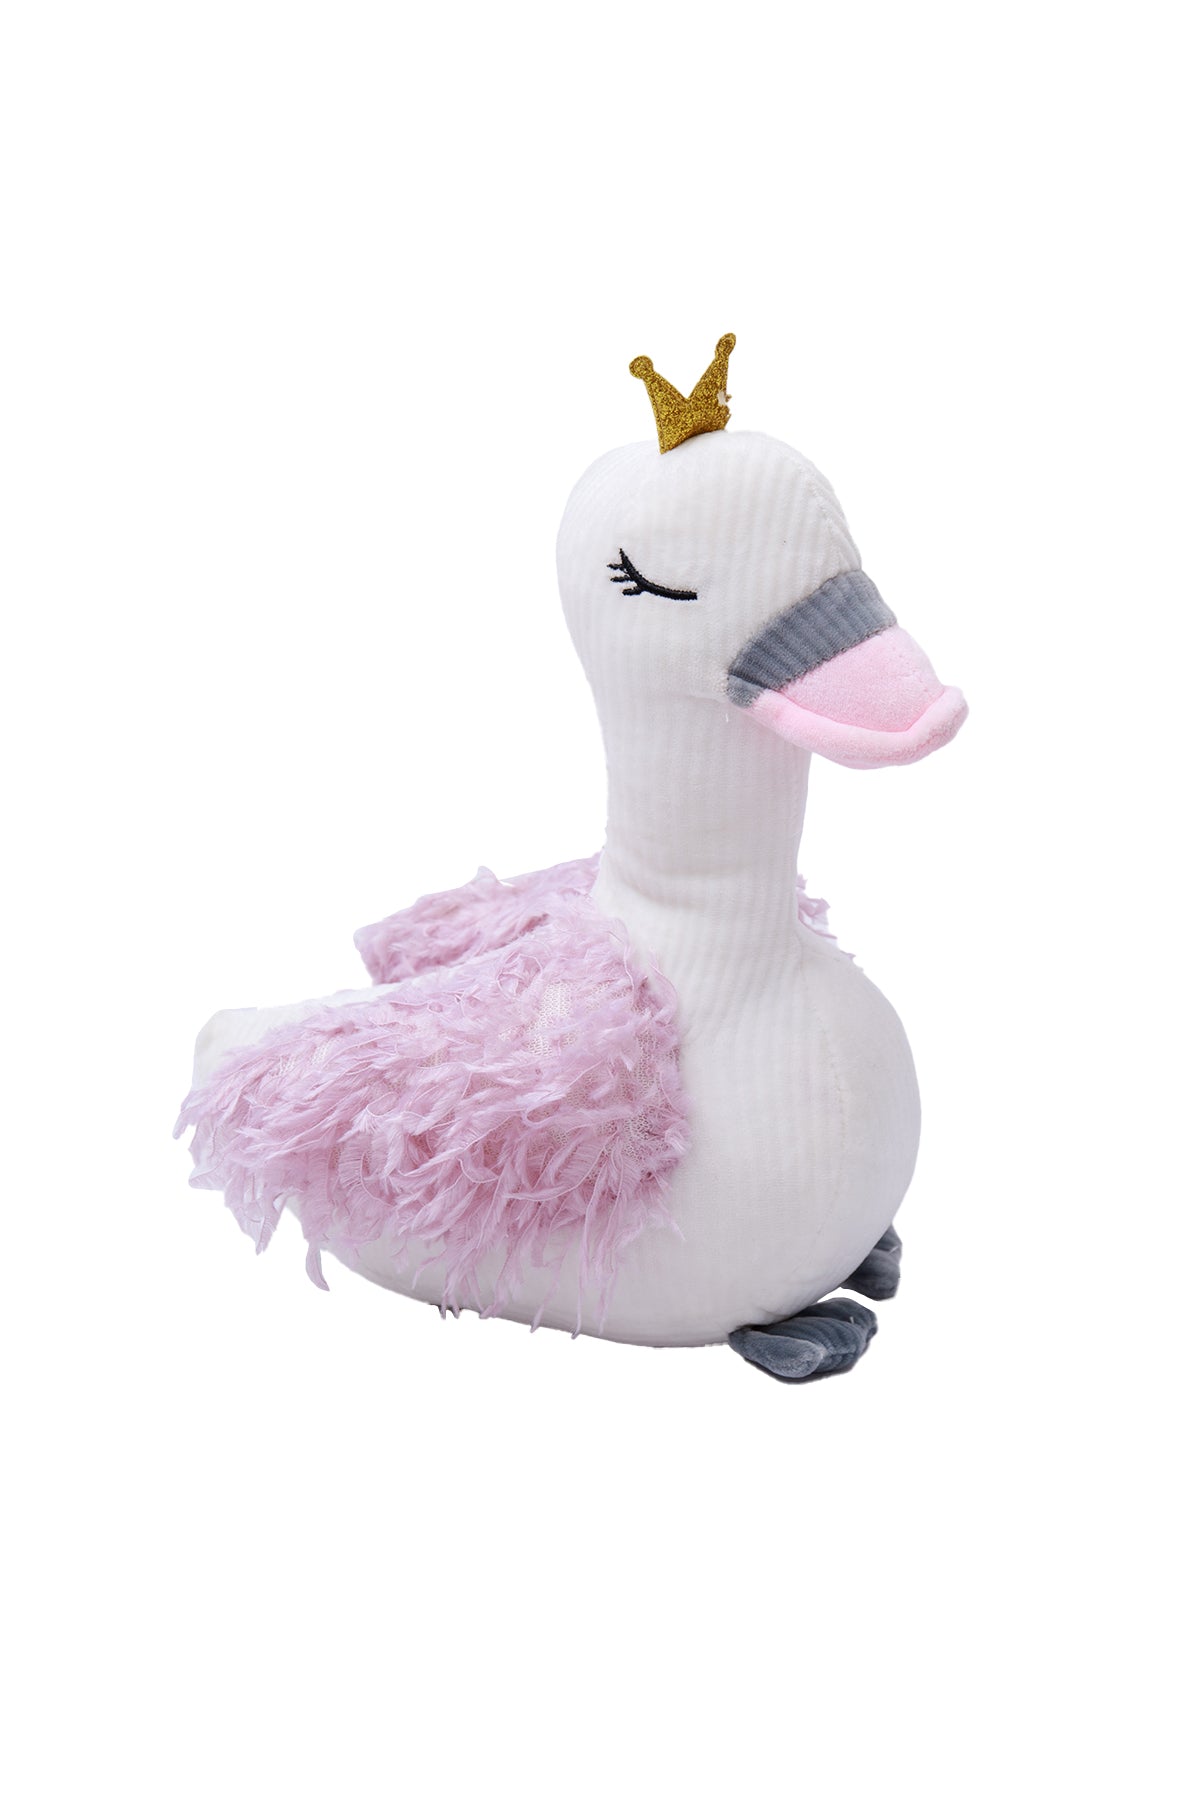 Stuffed Soft Swan Toy